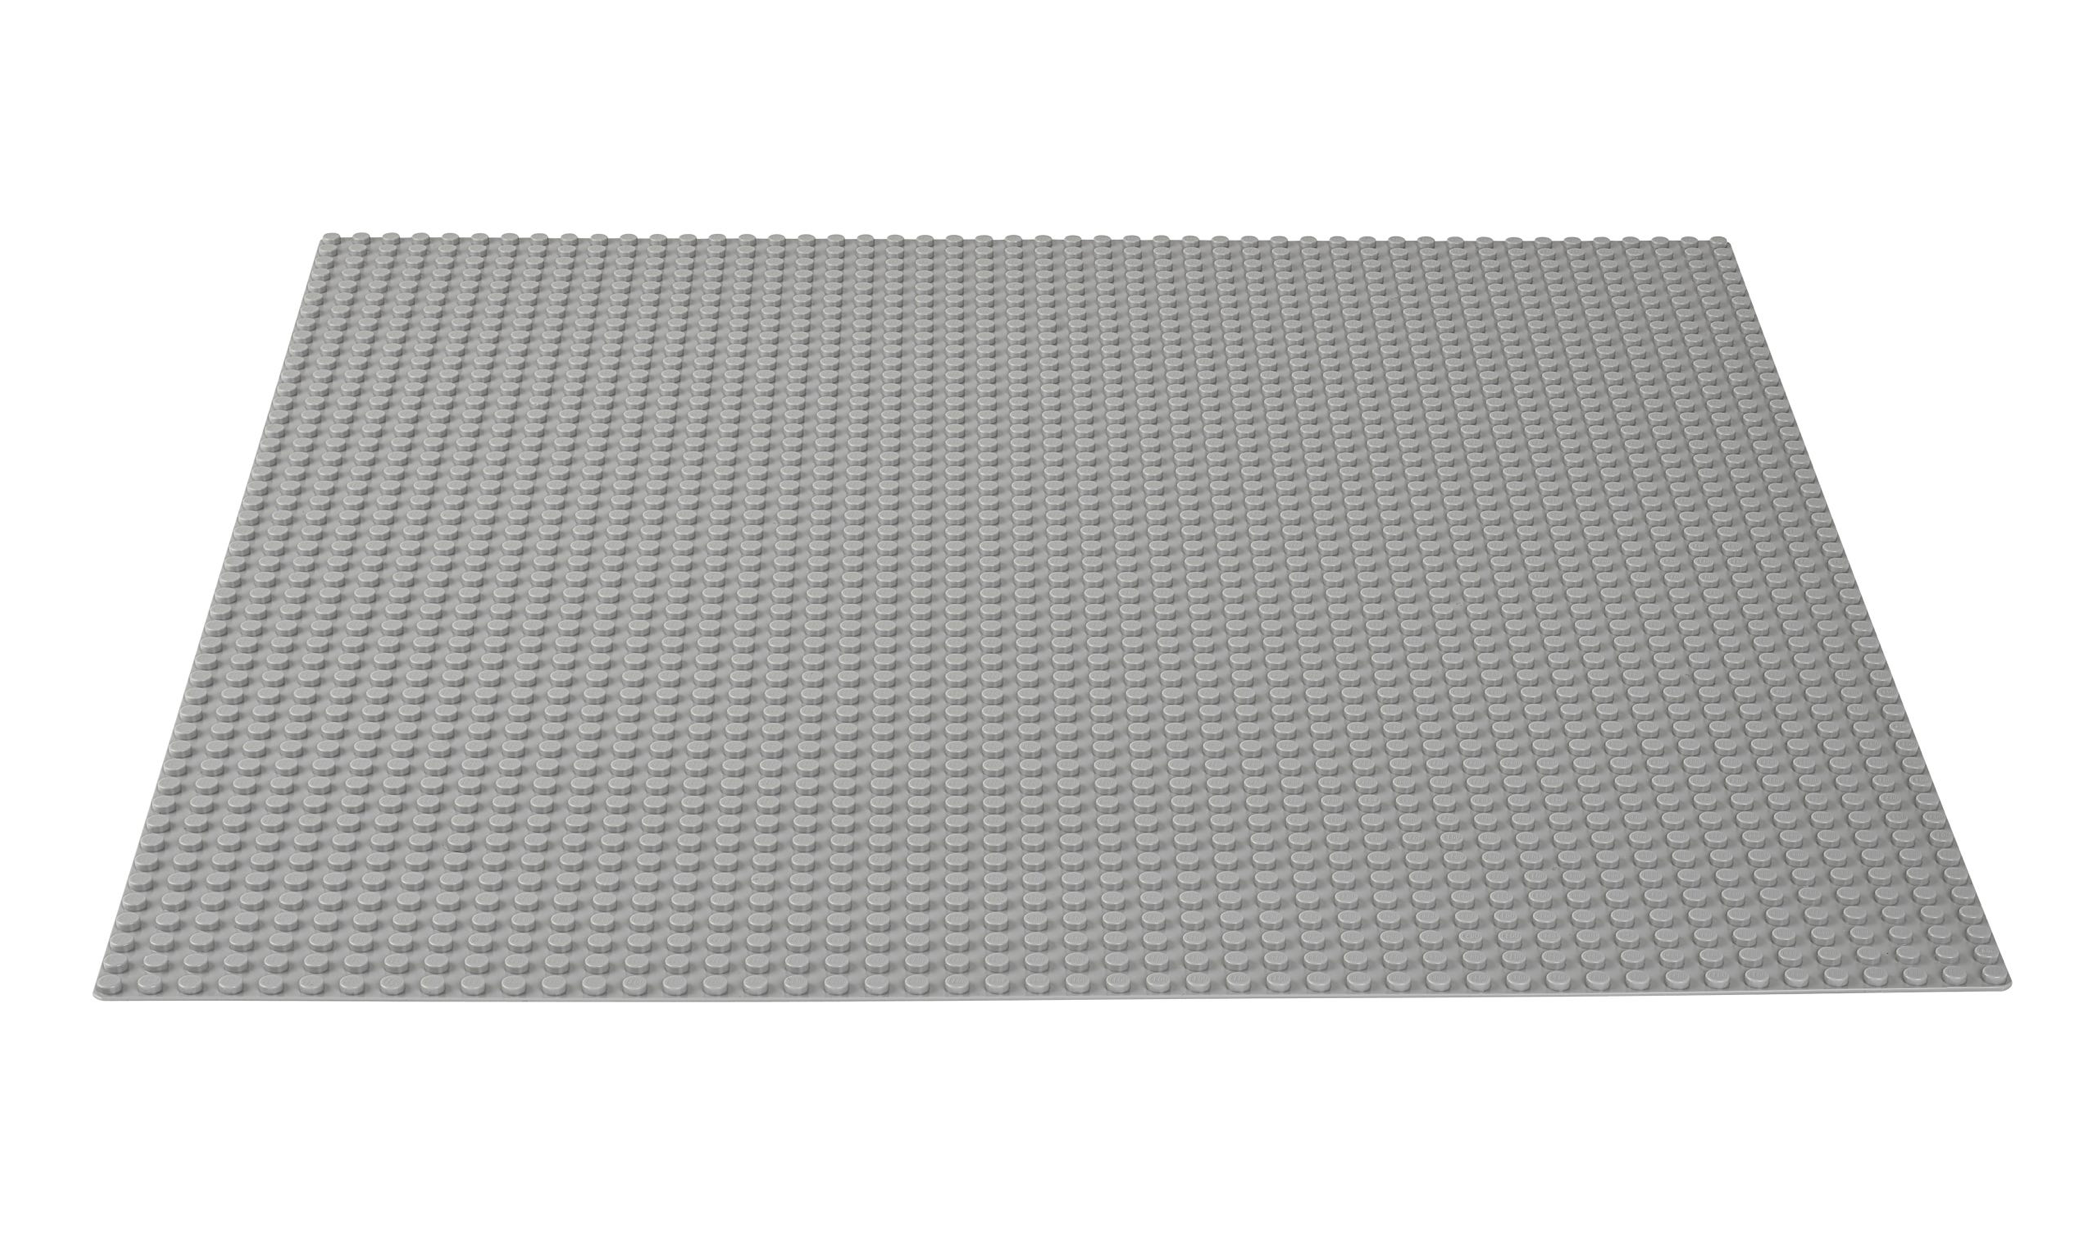 LEGO: Classic - Gray Baseplate